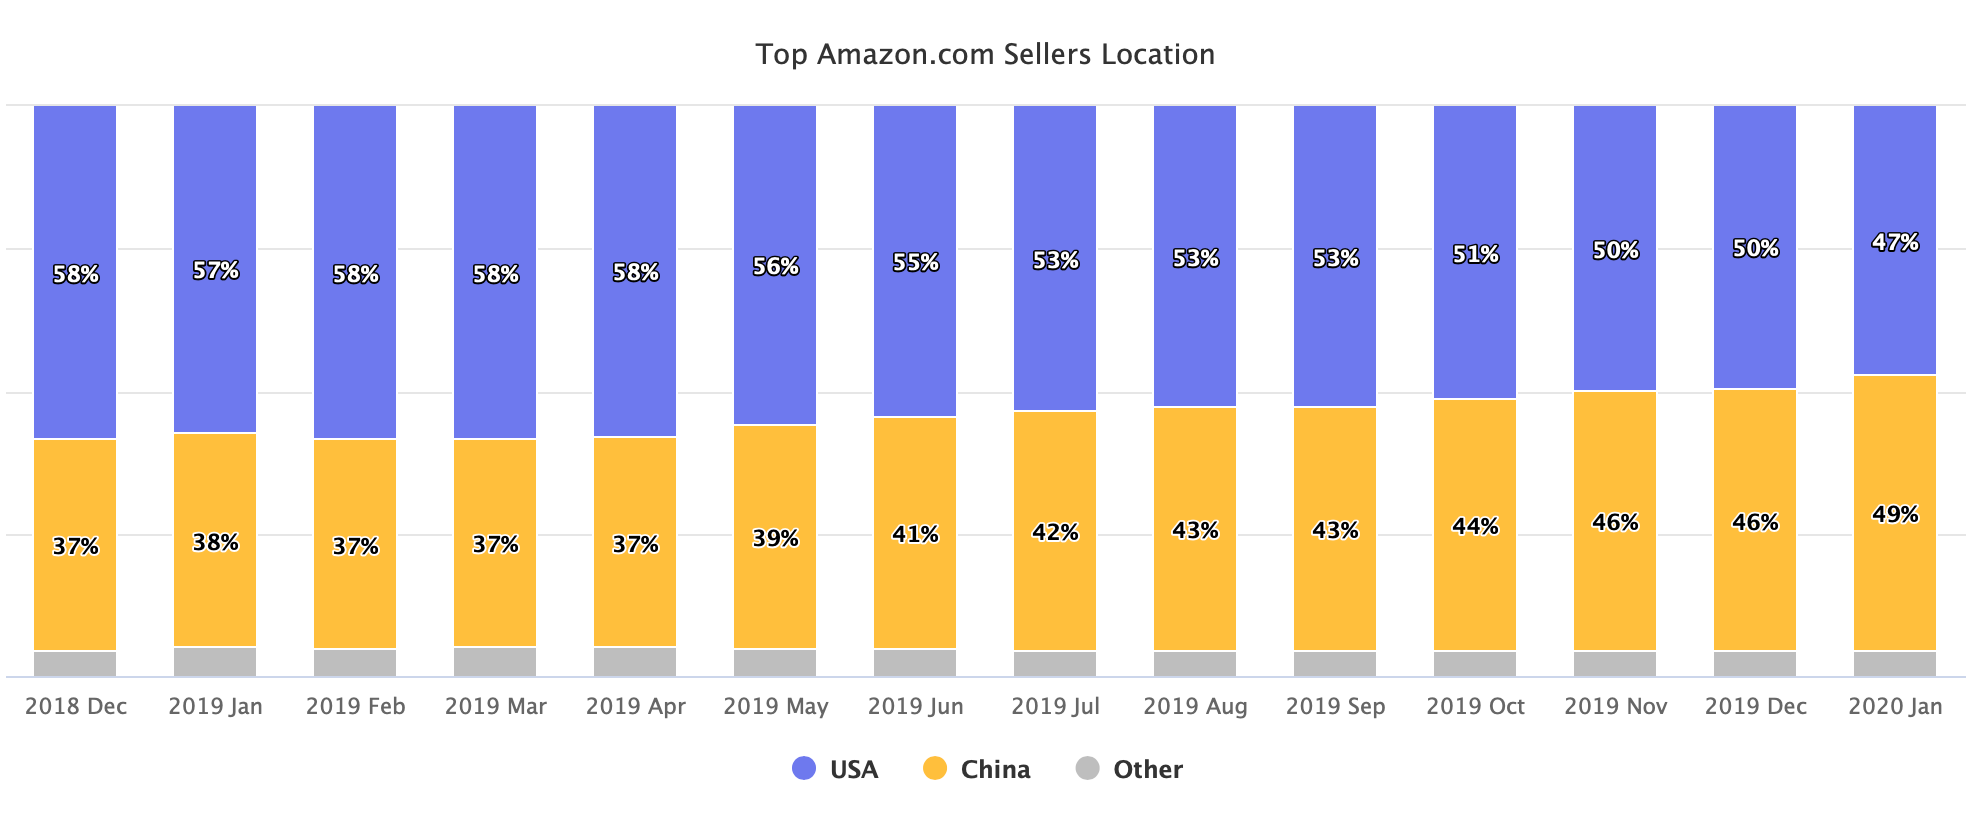 Top Amazon.com Sellers Location